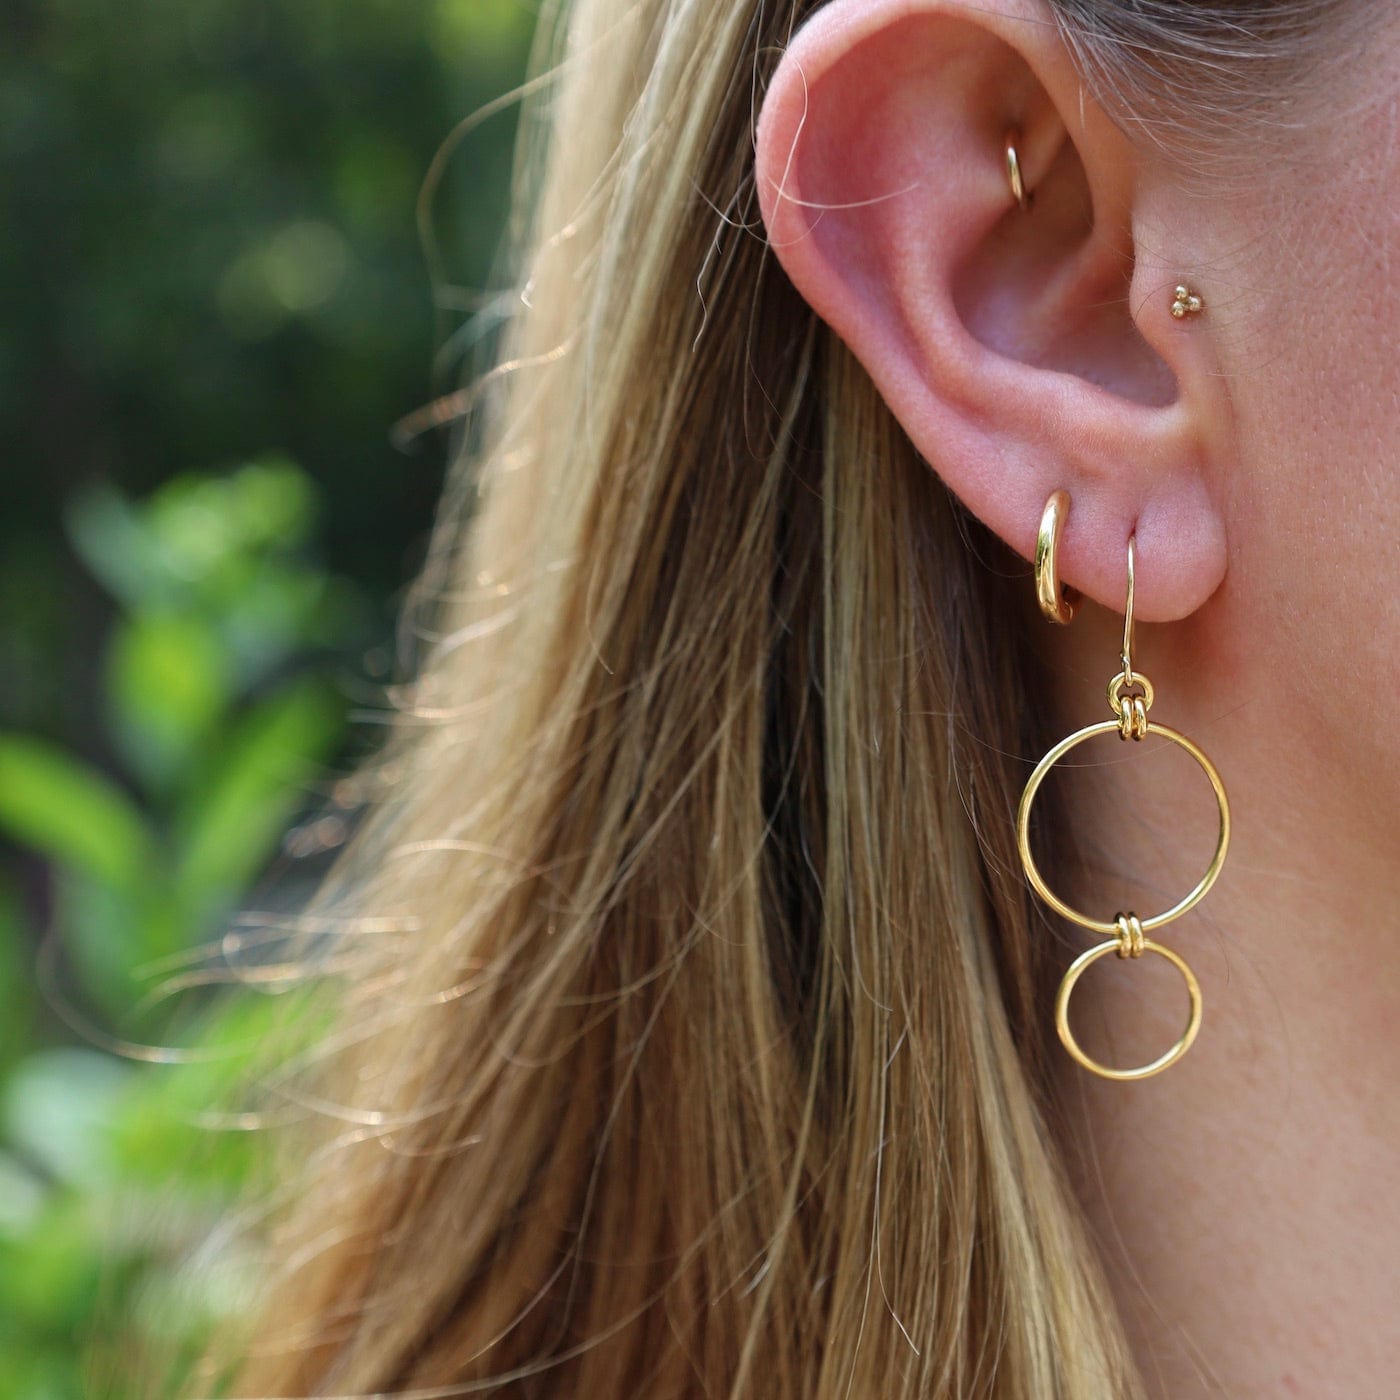 EAR-VRM Descending Rings Earrings - Gold Vermeil